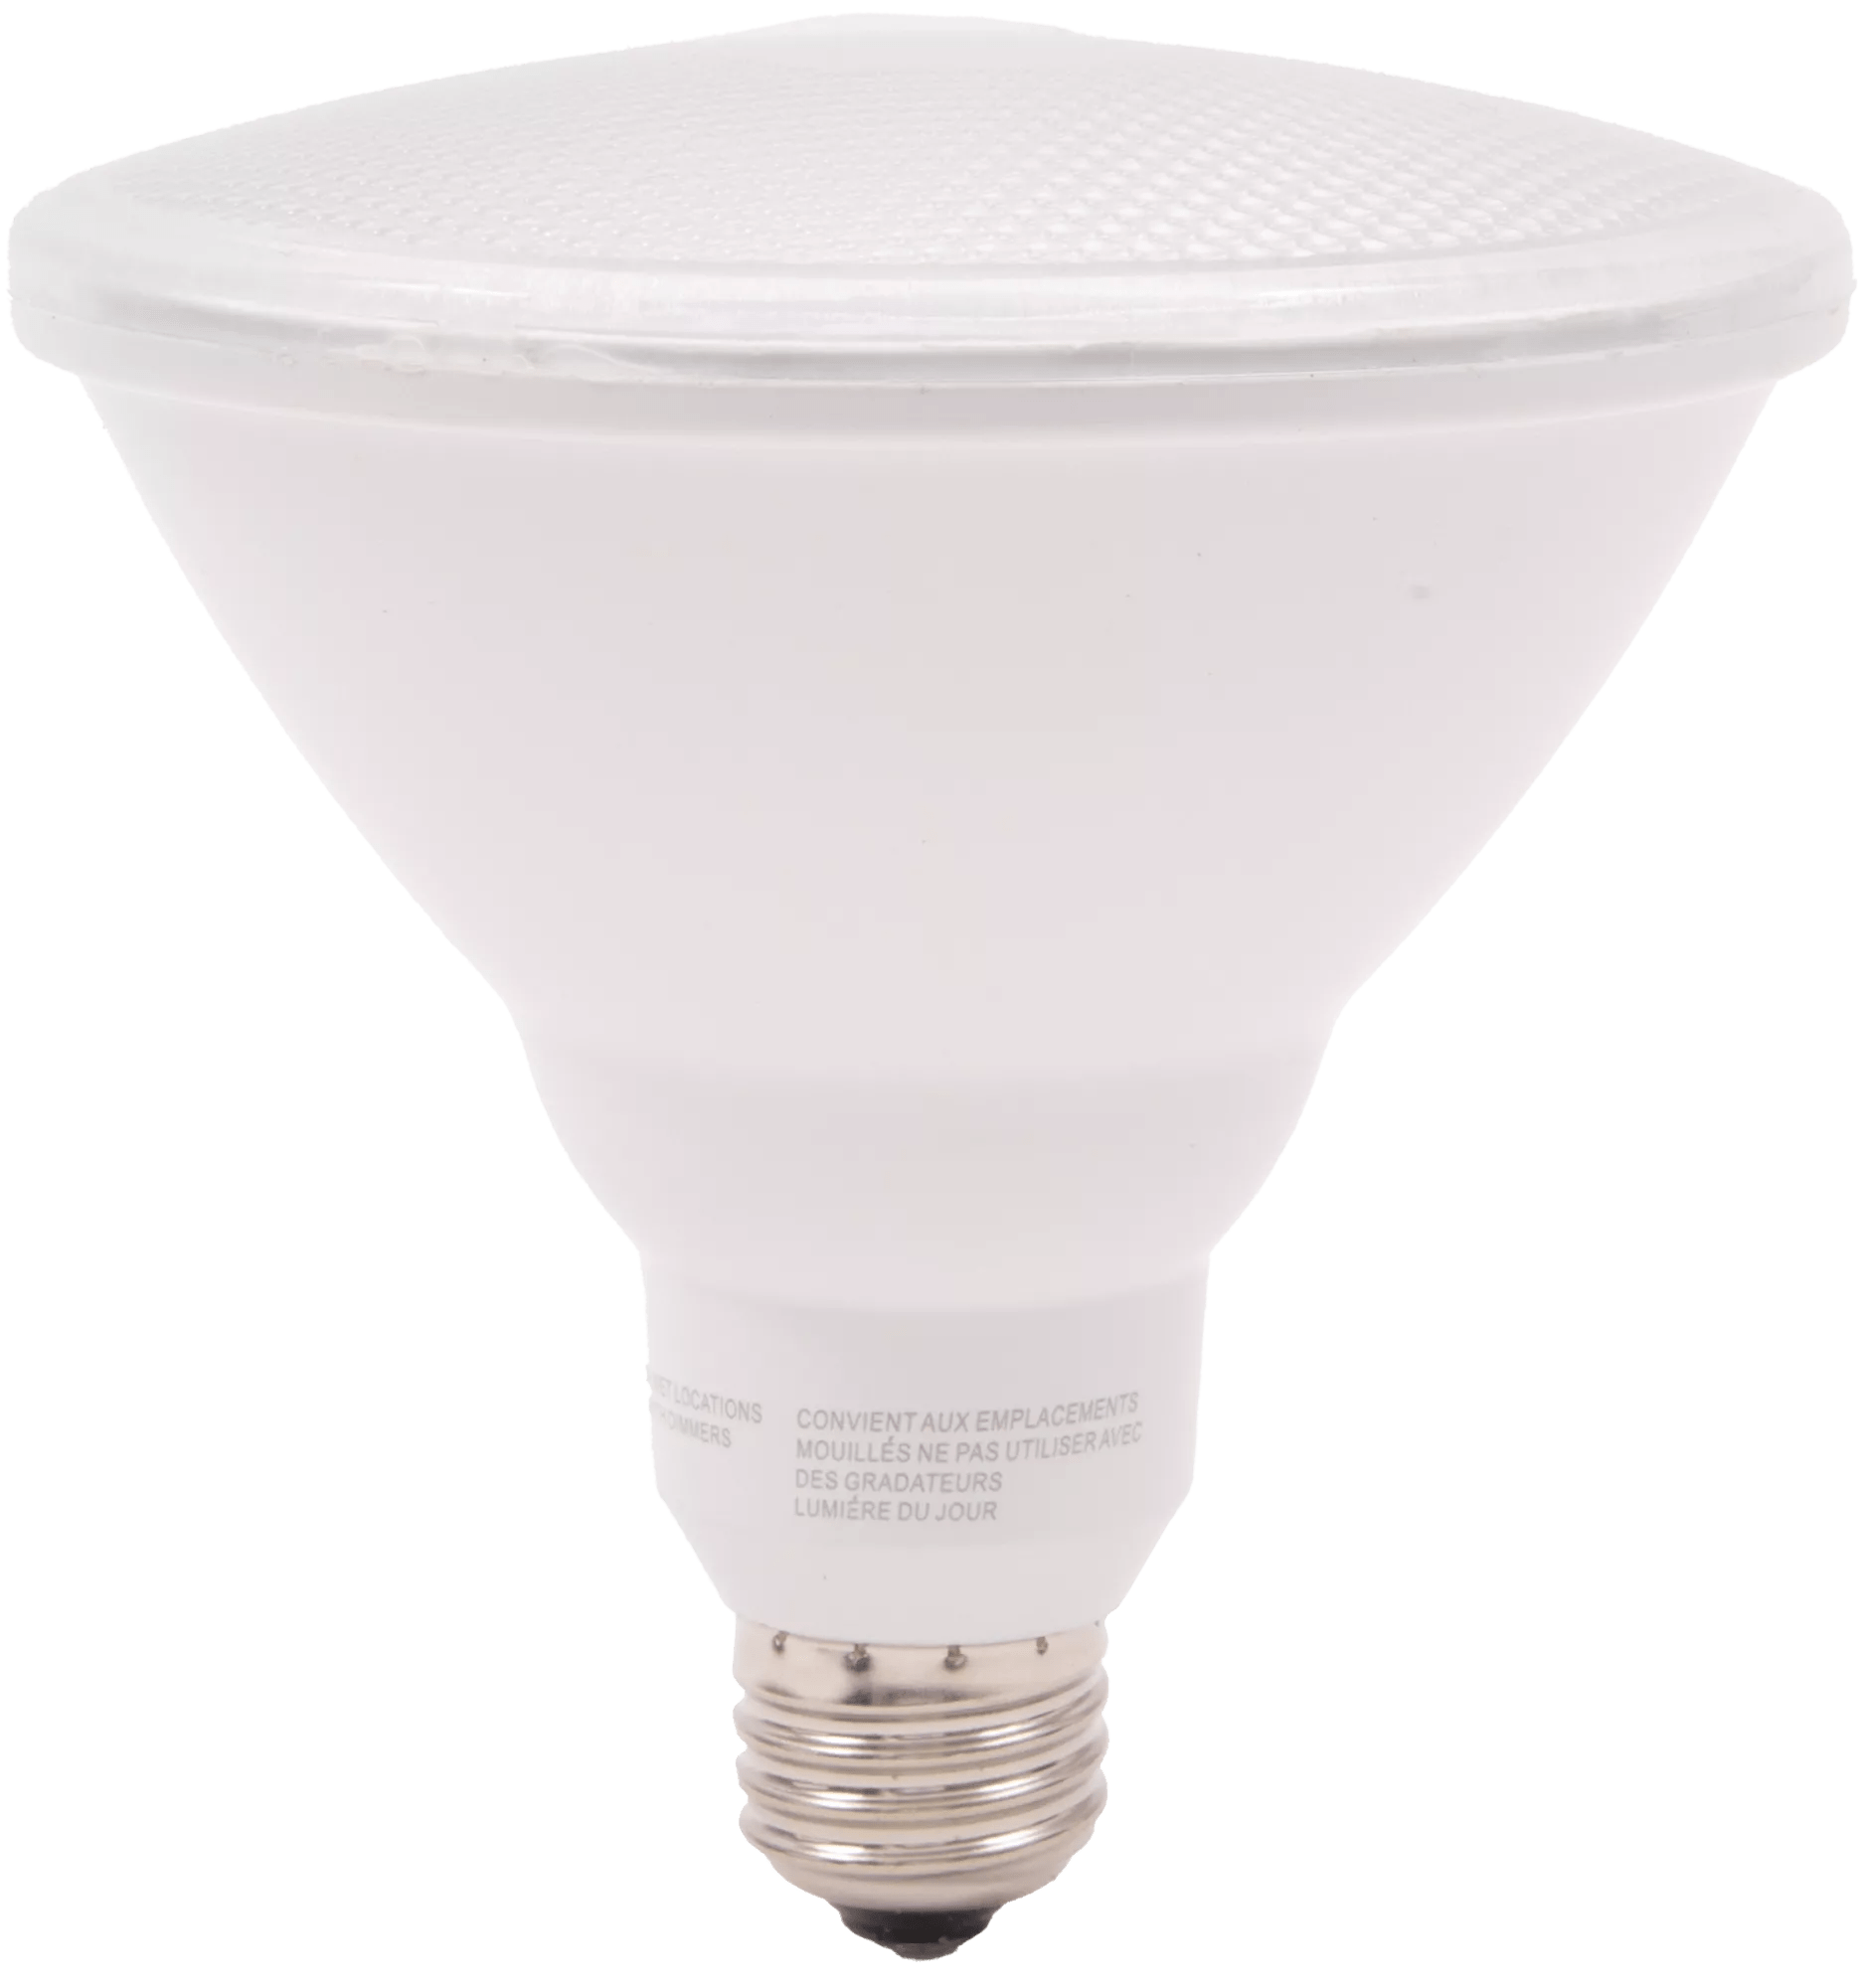 LED Flood Light Bulbs - 2 Pack